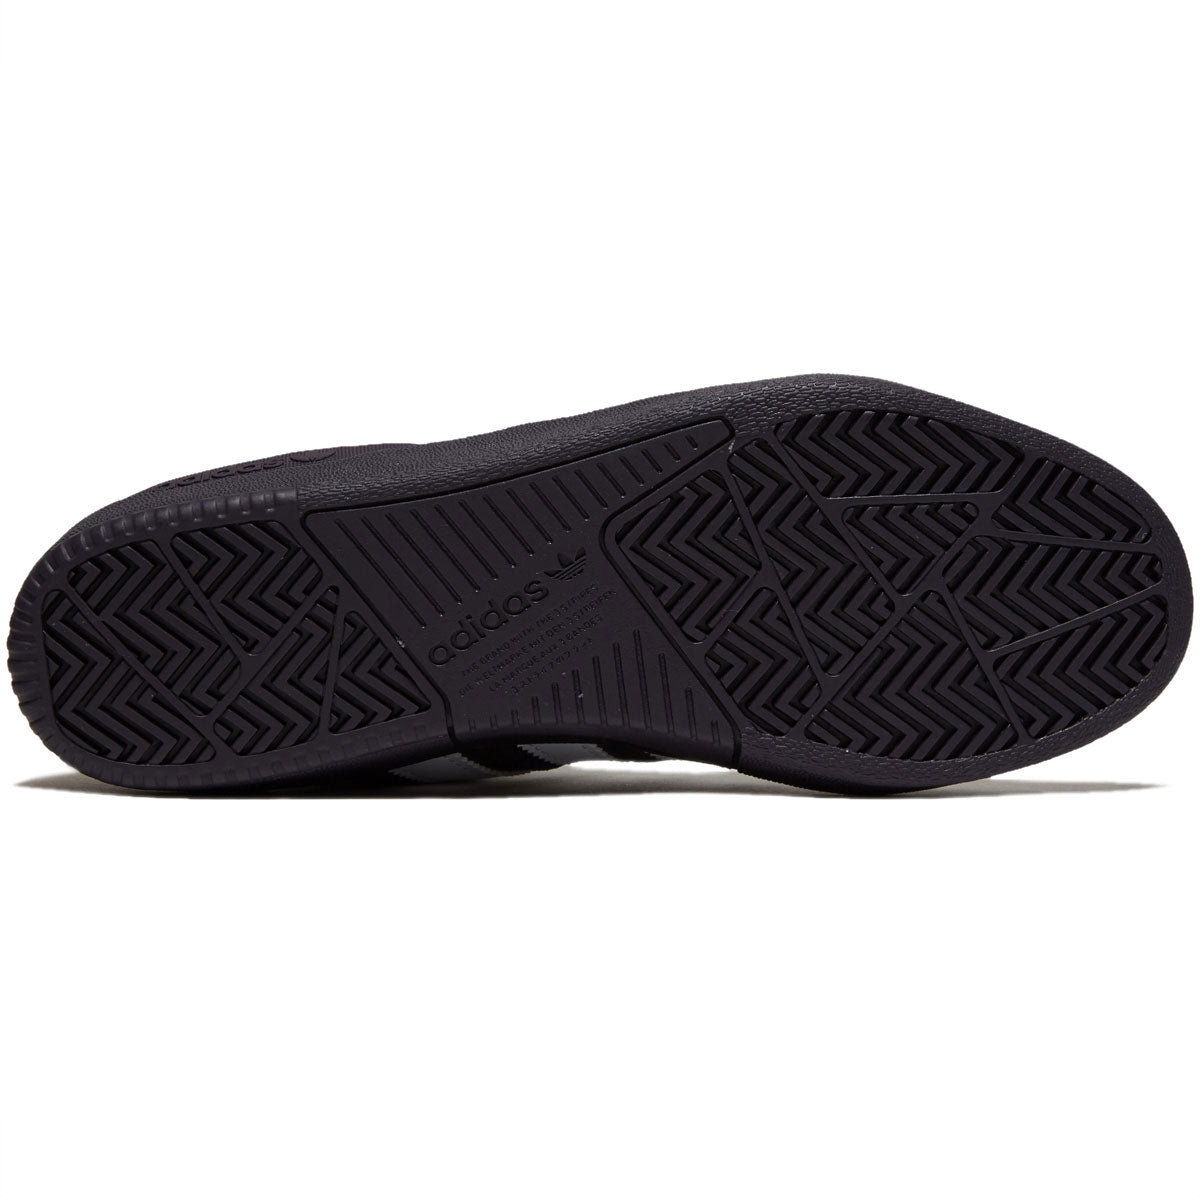 Adidas Tyshawn Shoes - Aurora Black/White/Bluebird image 4